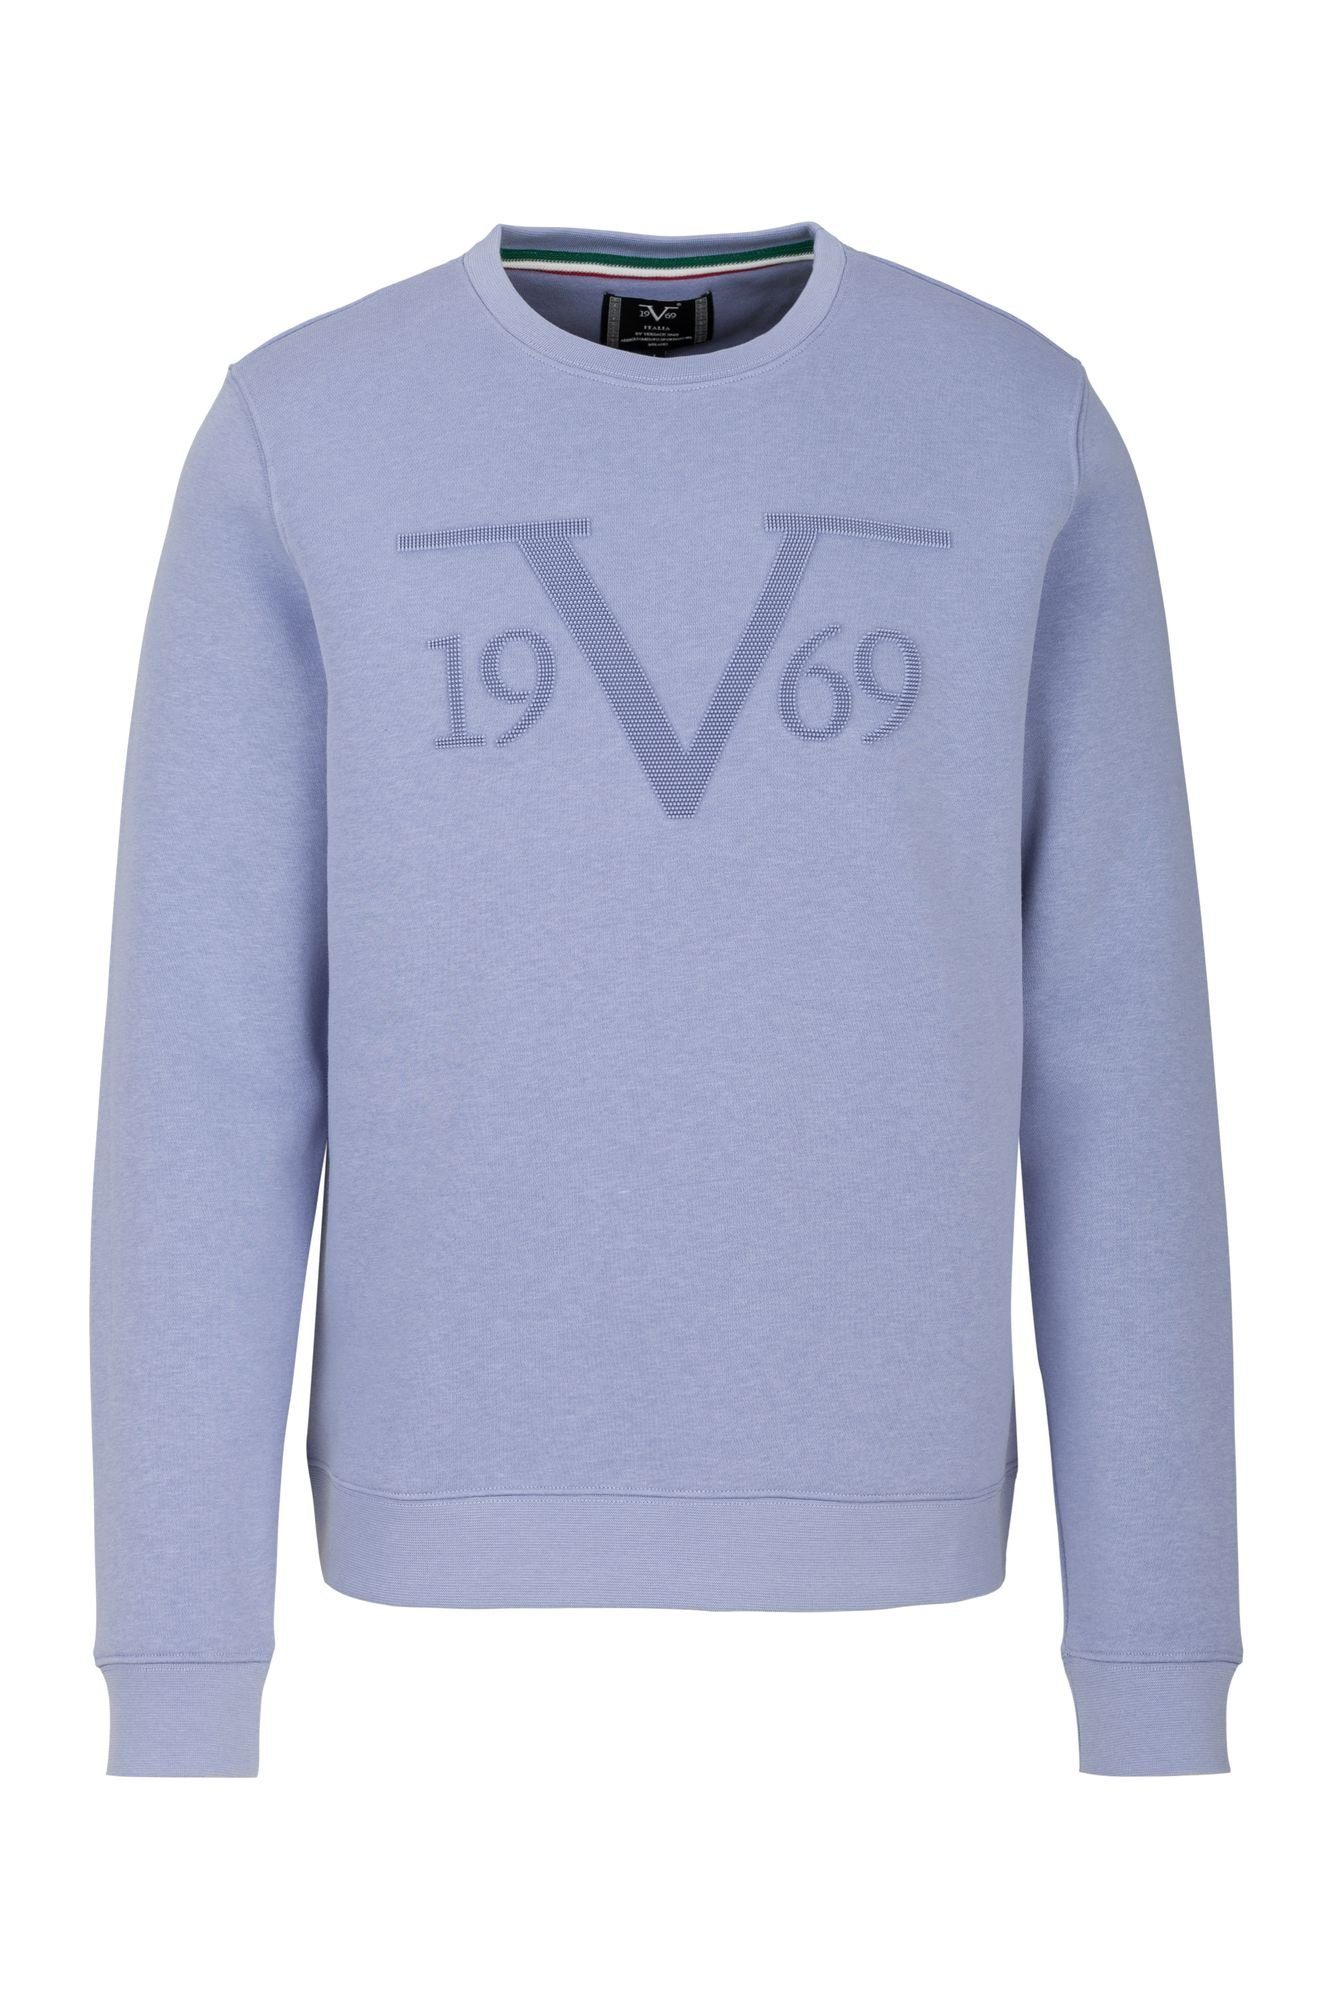 19V69 Italia by Versace Sweatshirt by Versace Sportivo SRL - Giorgio